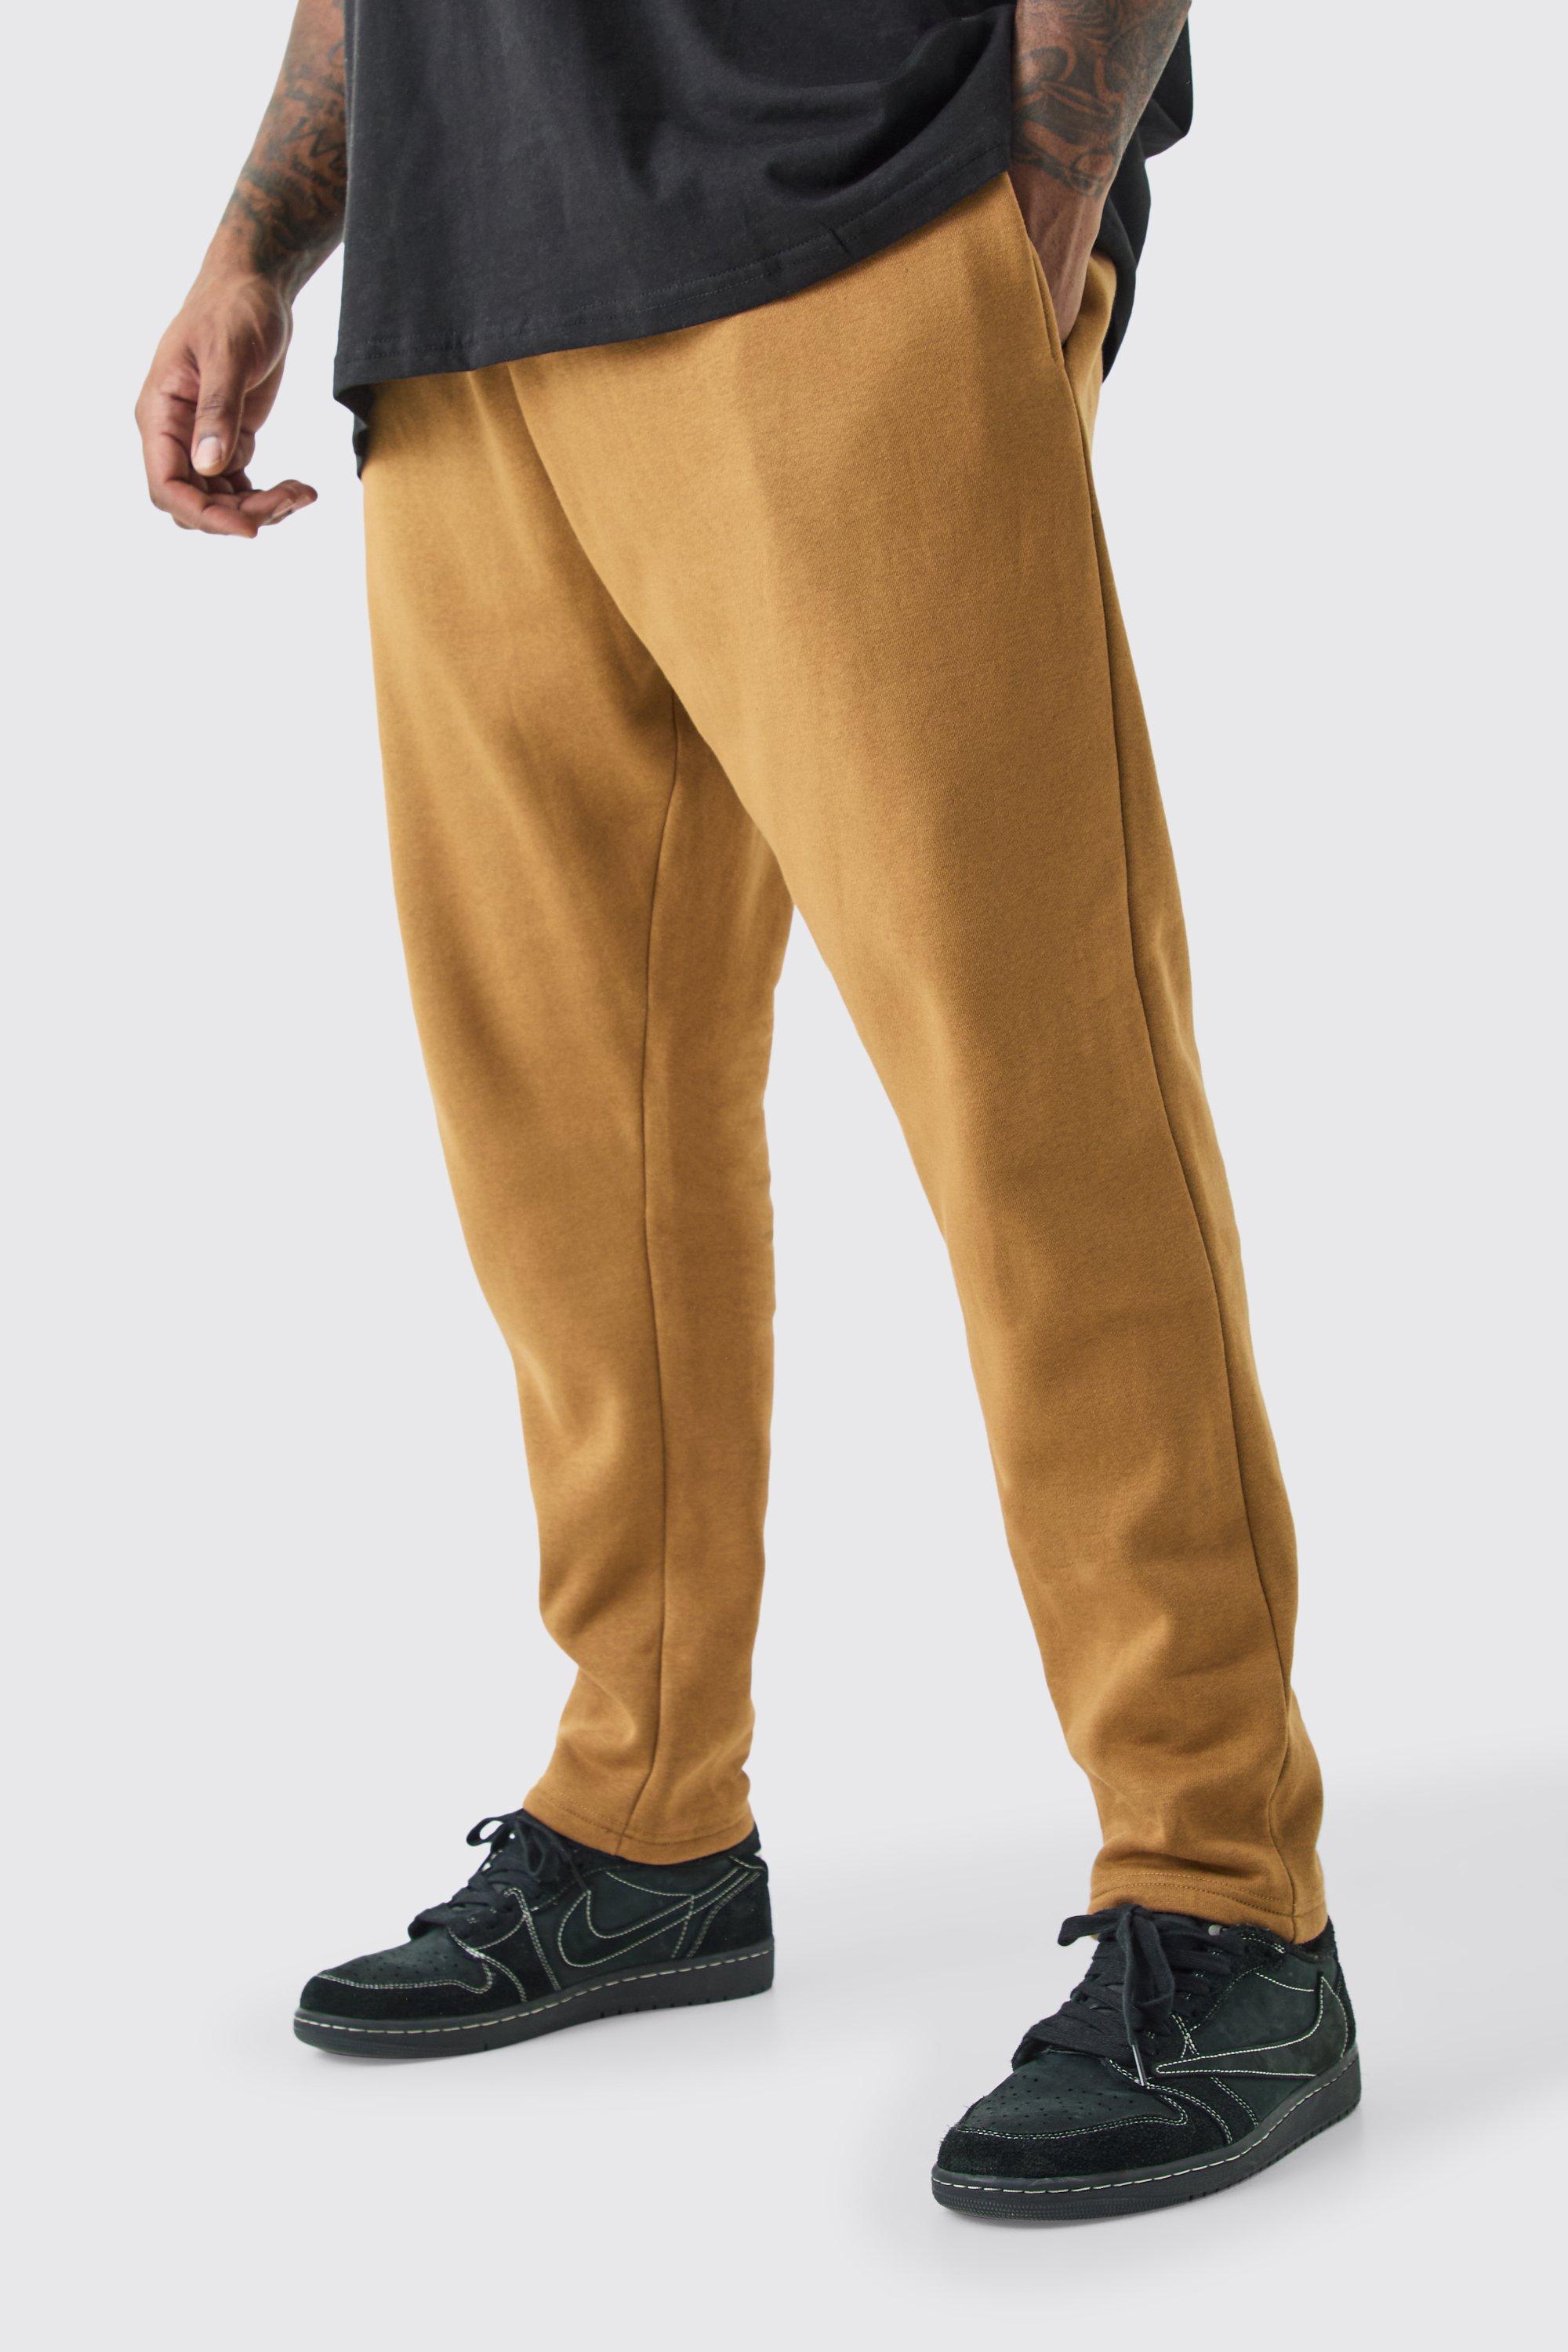 Image of Pantaloni tuta Plus Size affusolati Basic, Brown